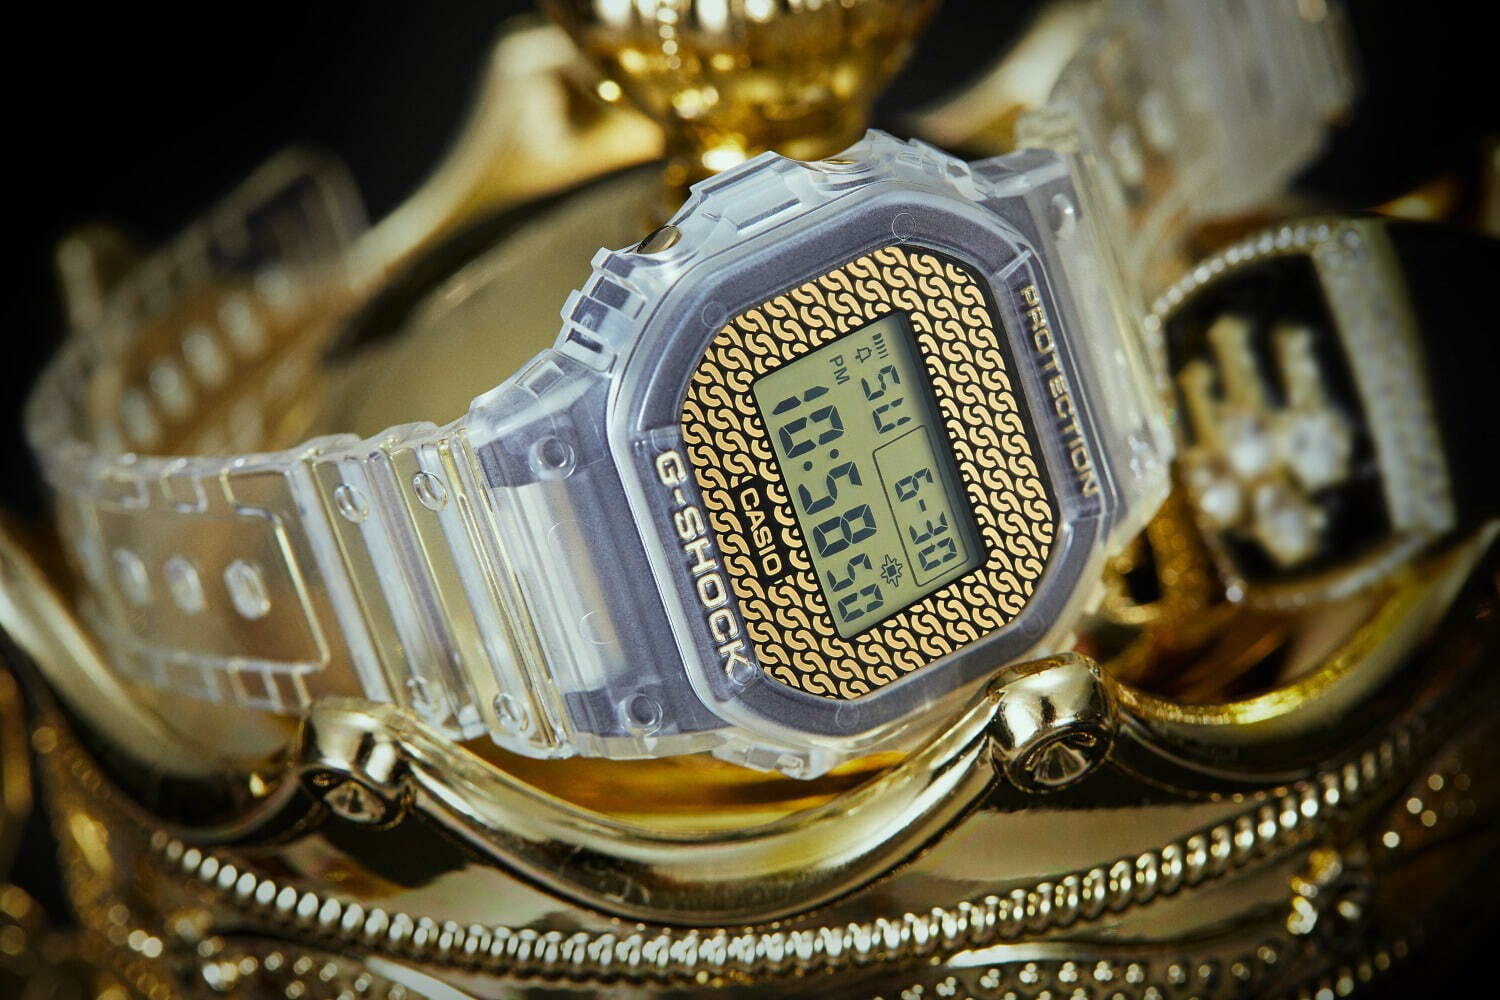 G Shock チェーンモチーフ 文字板のゴールド腕時計 付け替え可能なクリアバンド ベゼル付属 ファッションプレス